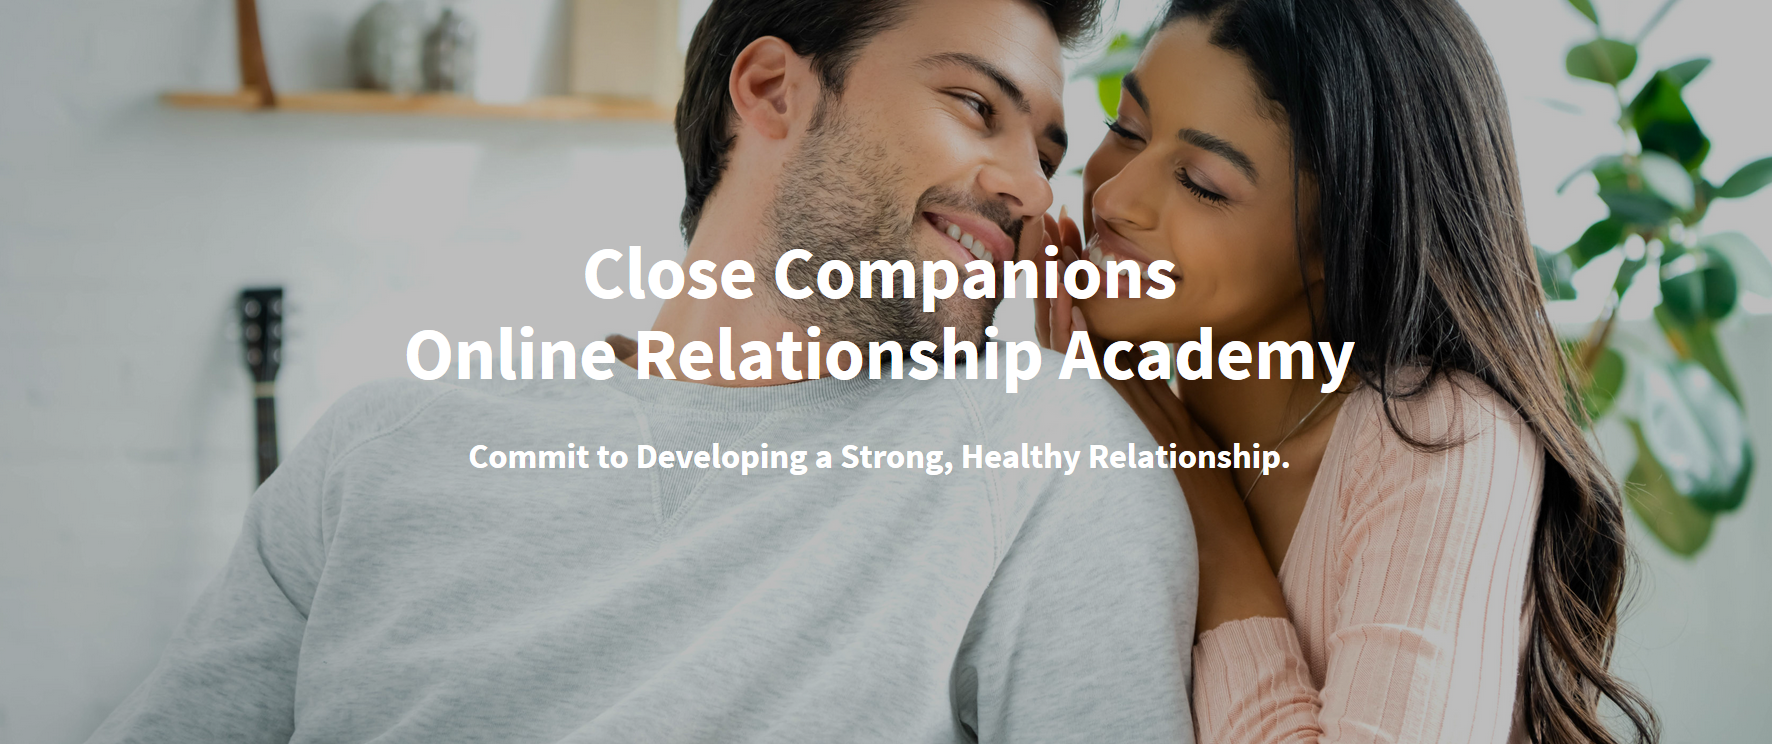 Online Relationship Academy